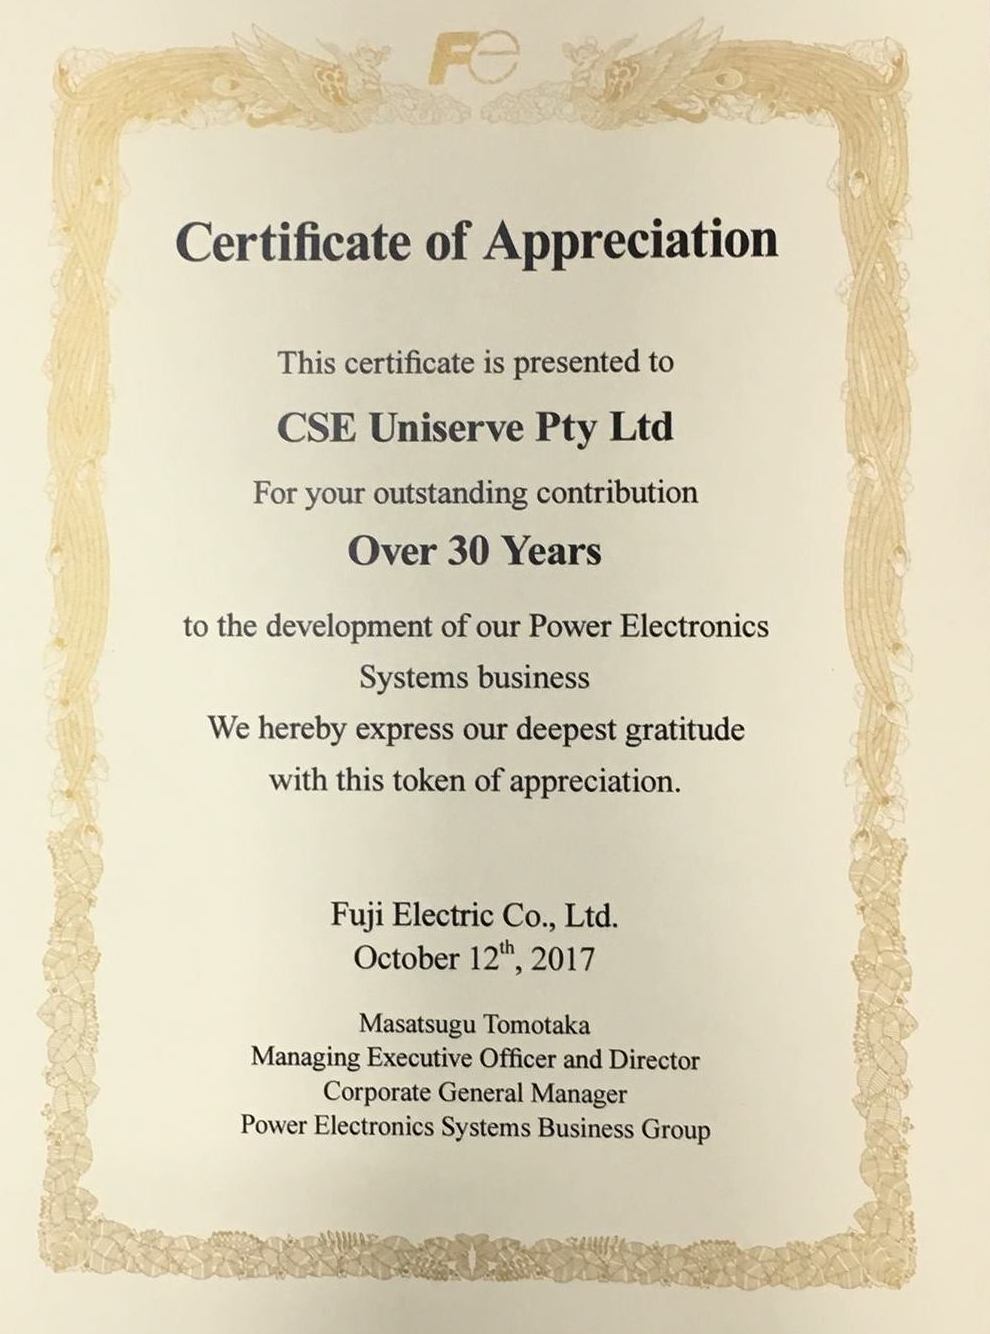 Fuji Electric – 30 Years of Business